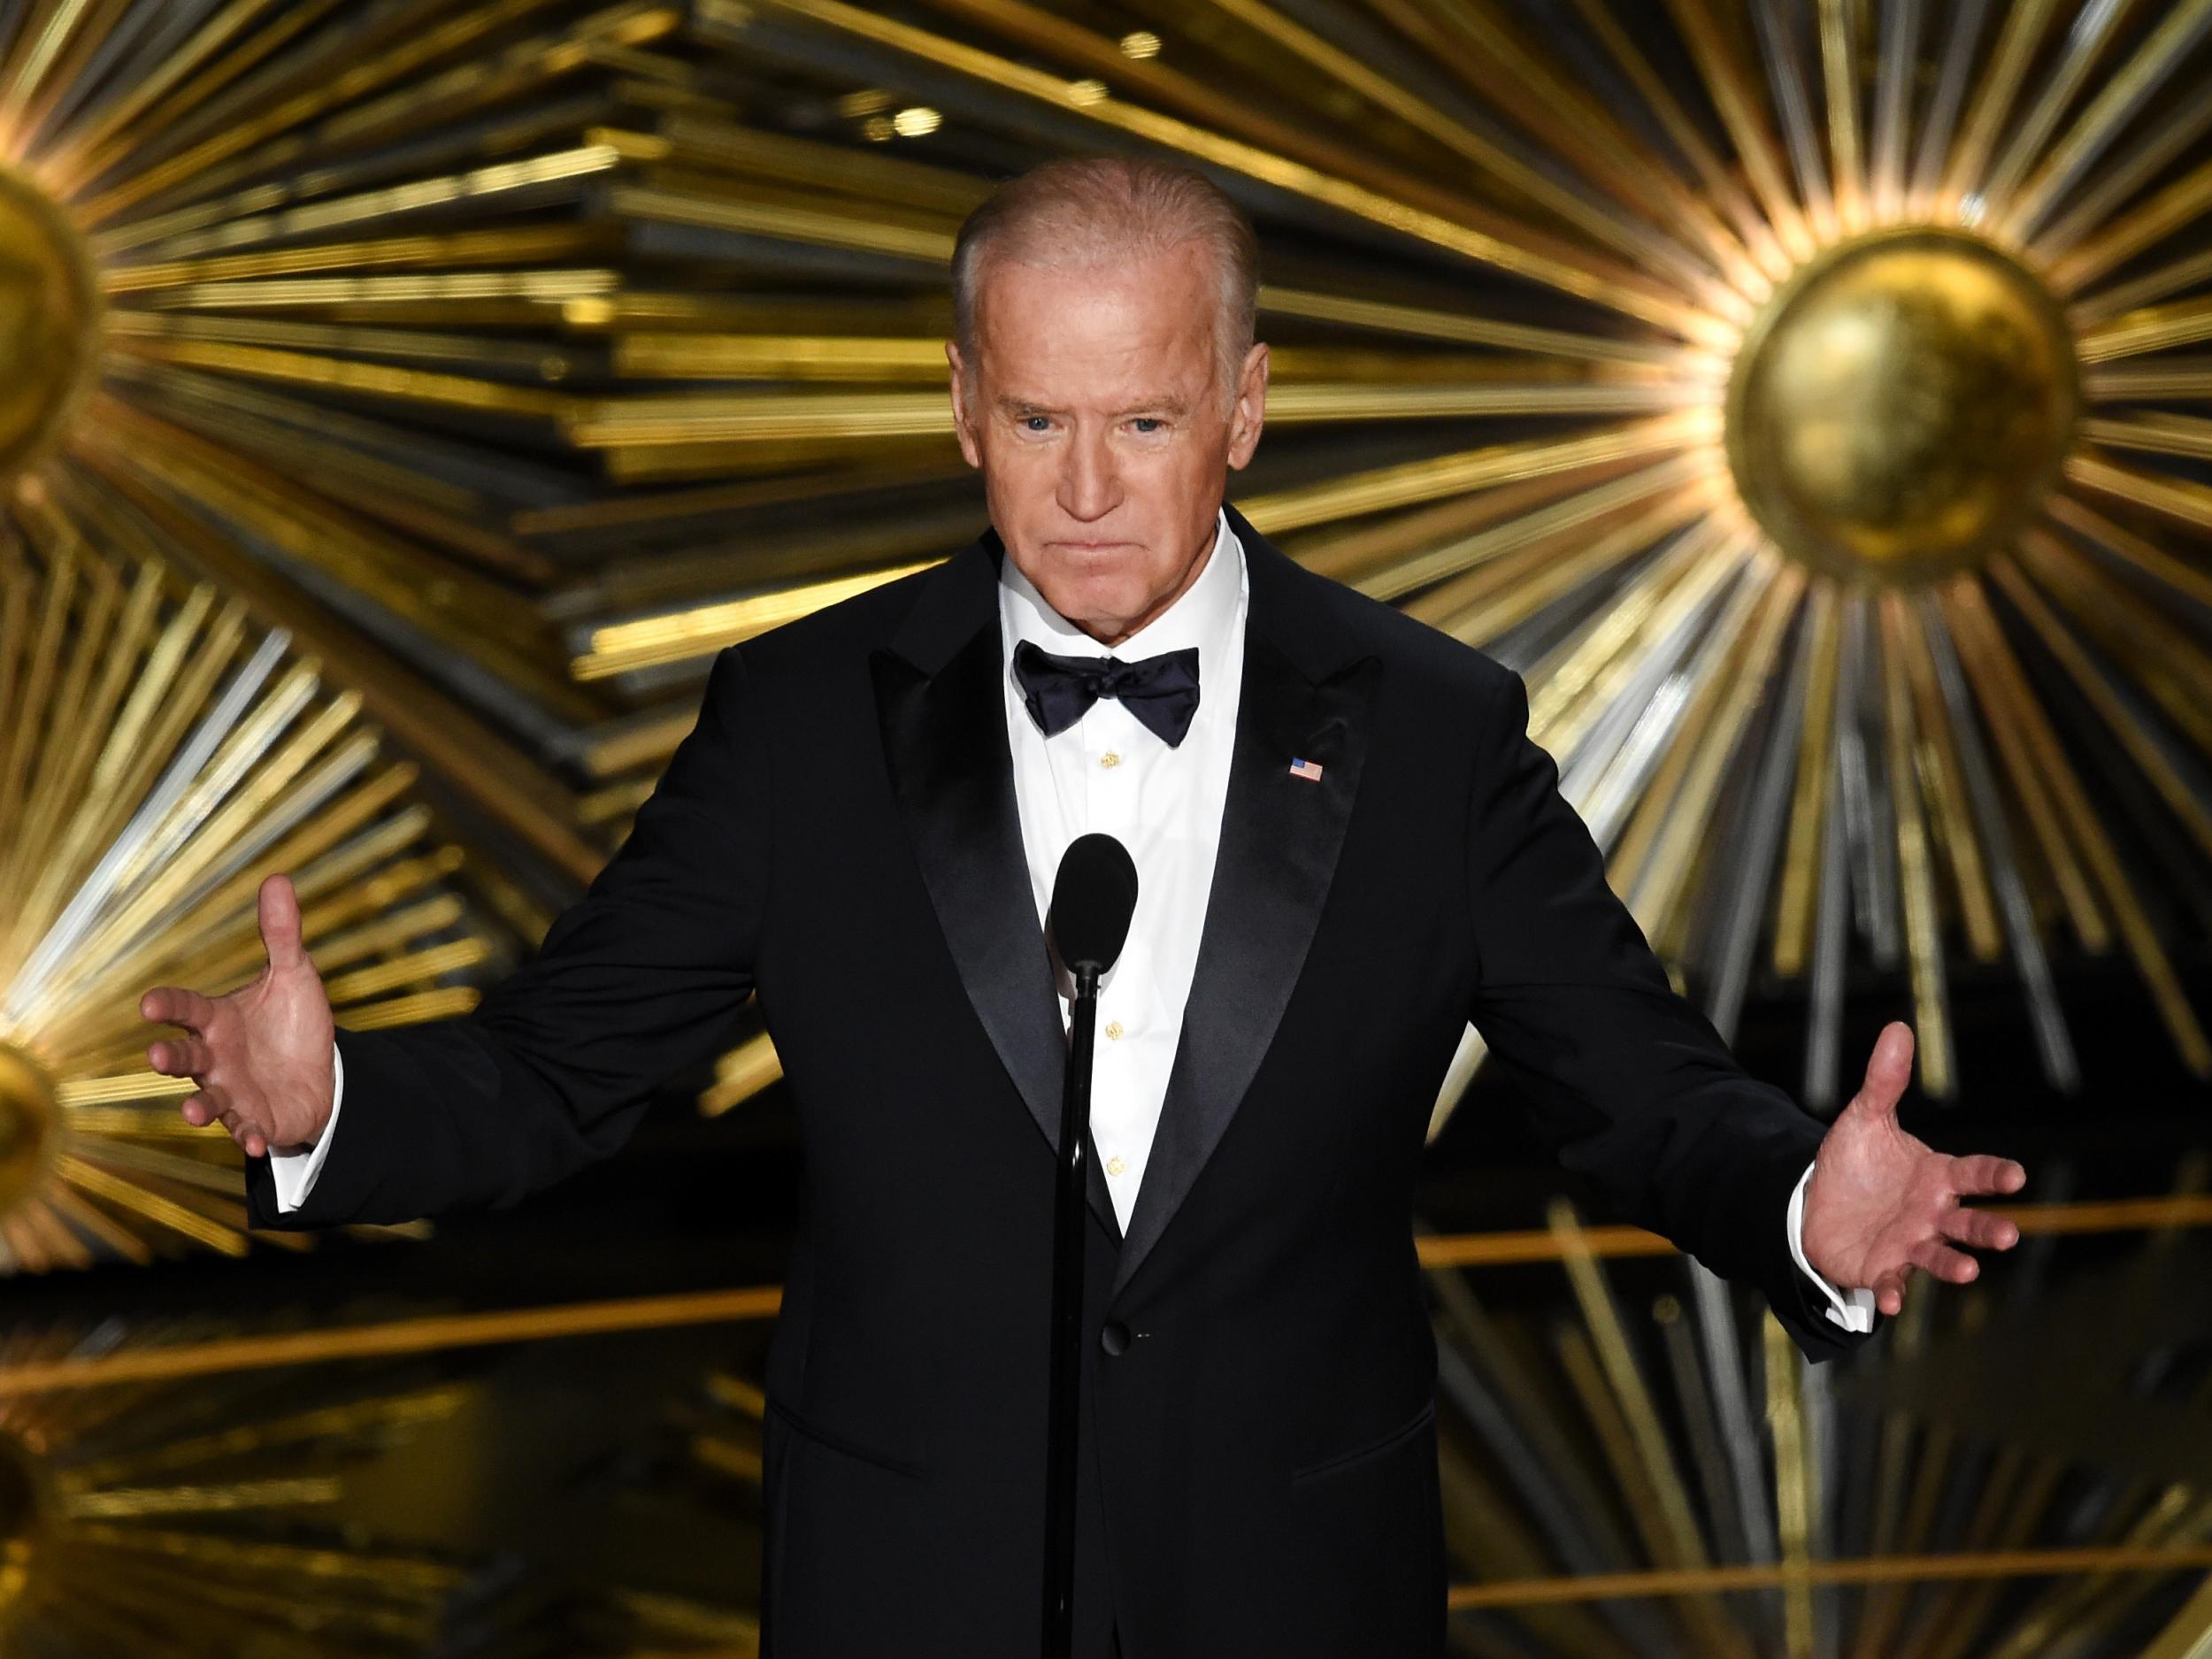 Joe Biden speaking at the 88th Academy Awards